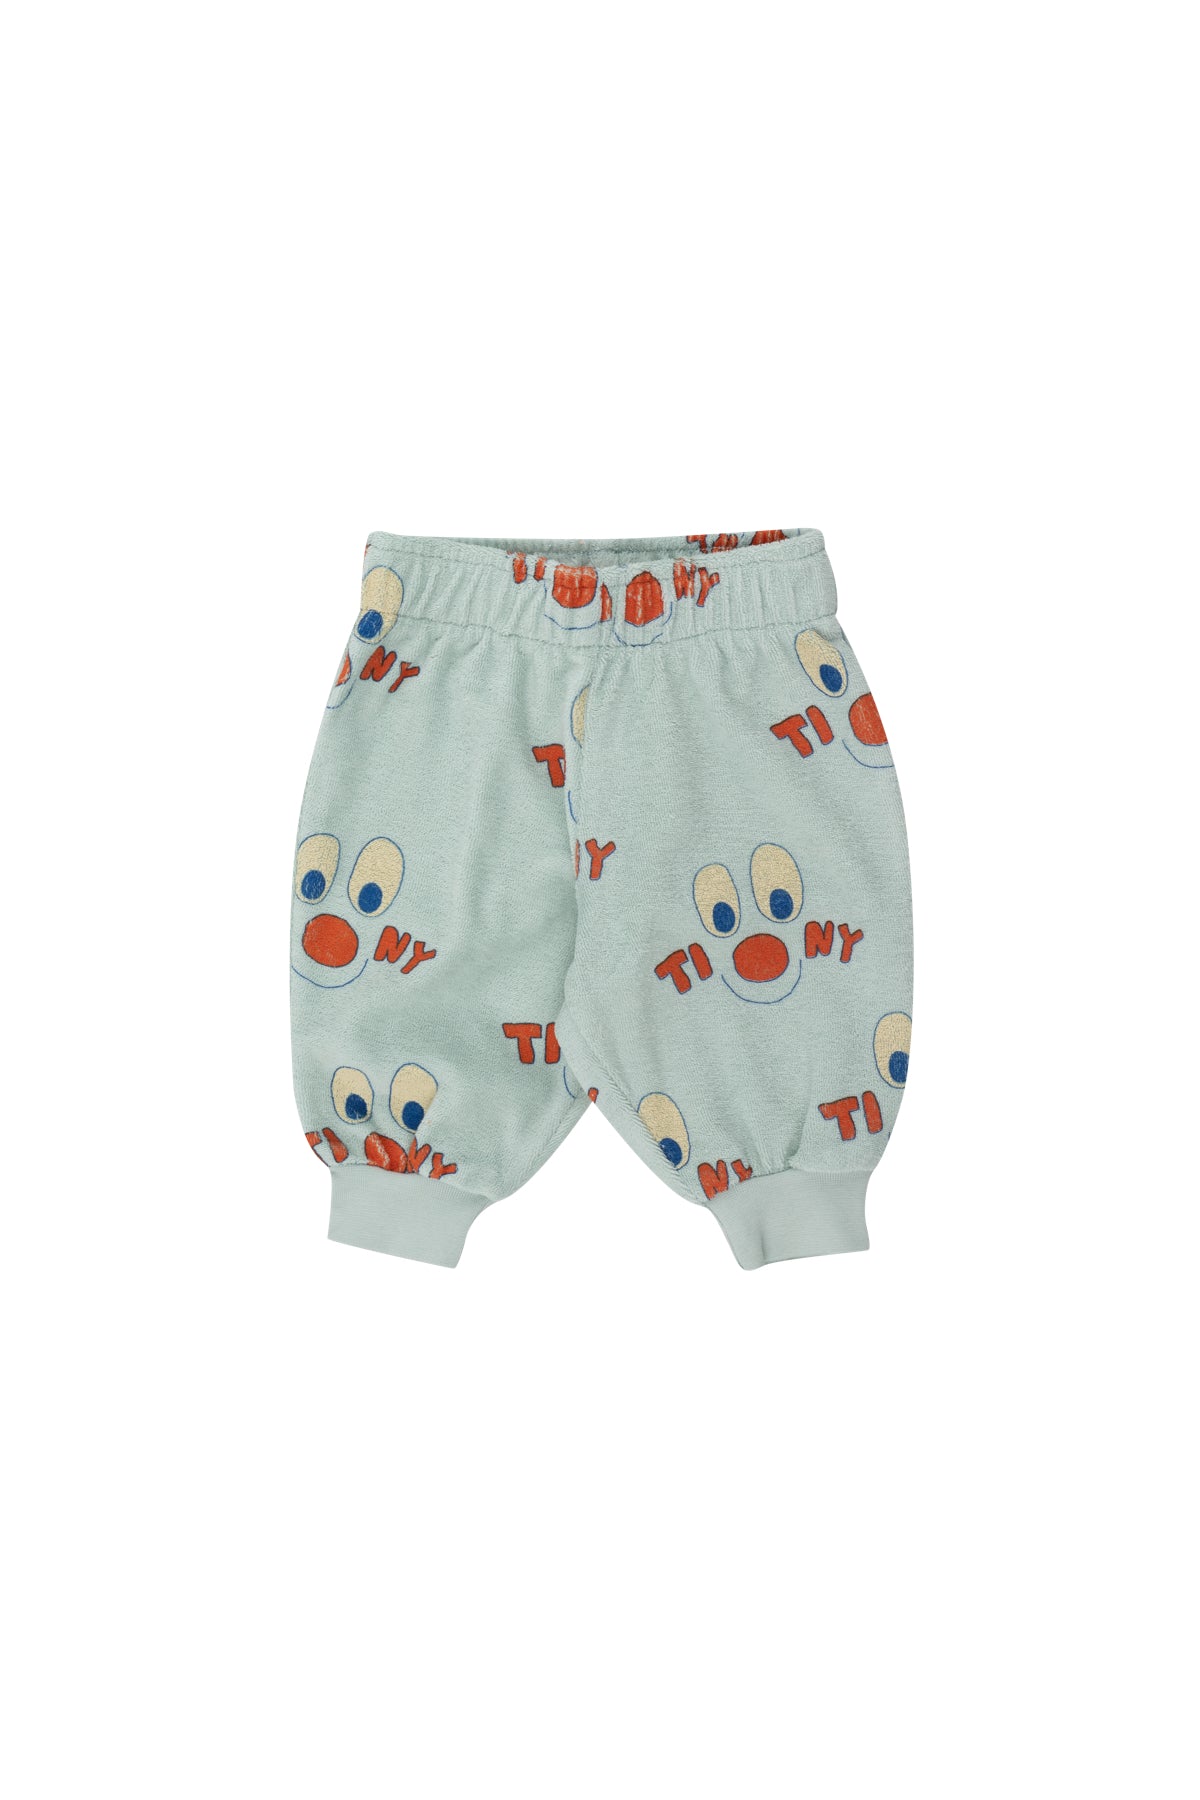 Tiny Cottons - clowns baby sweatpants - jade grey